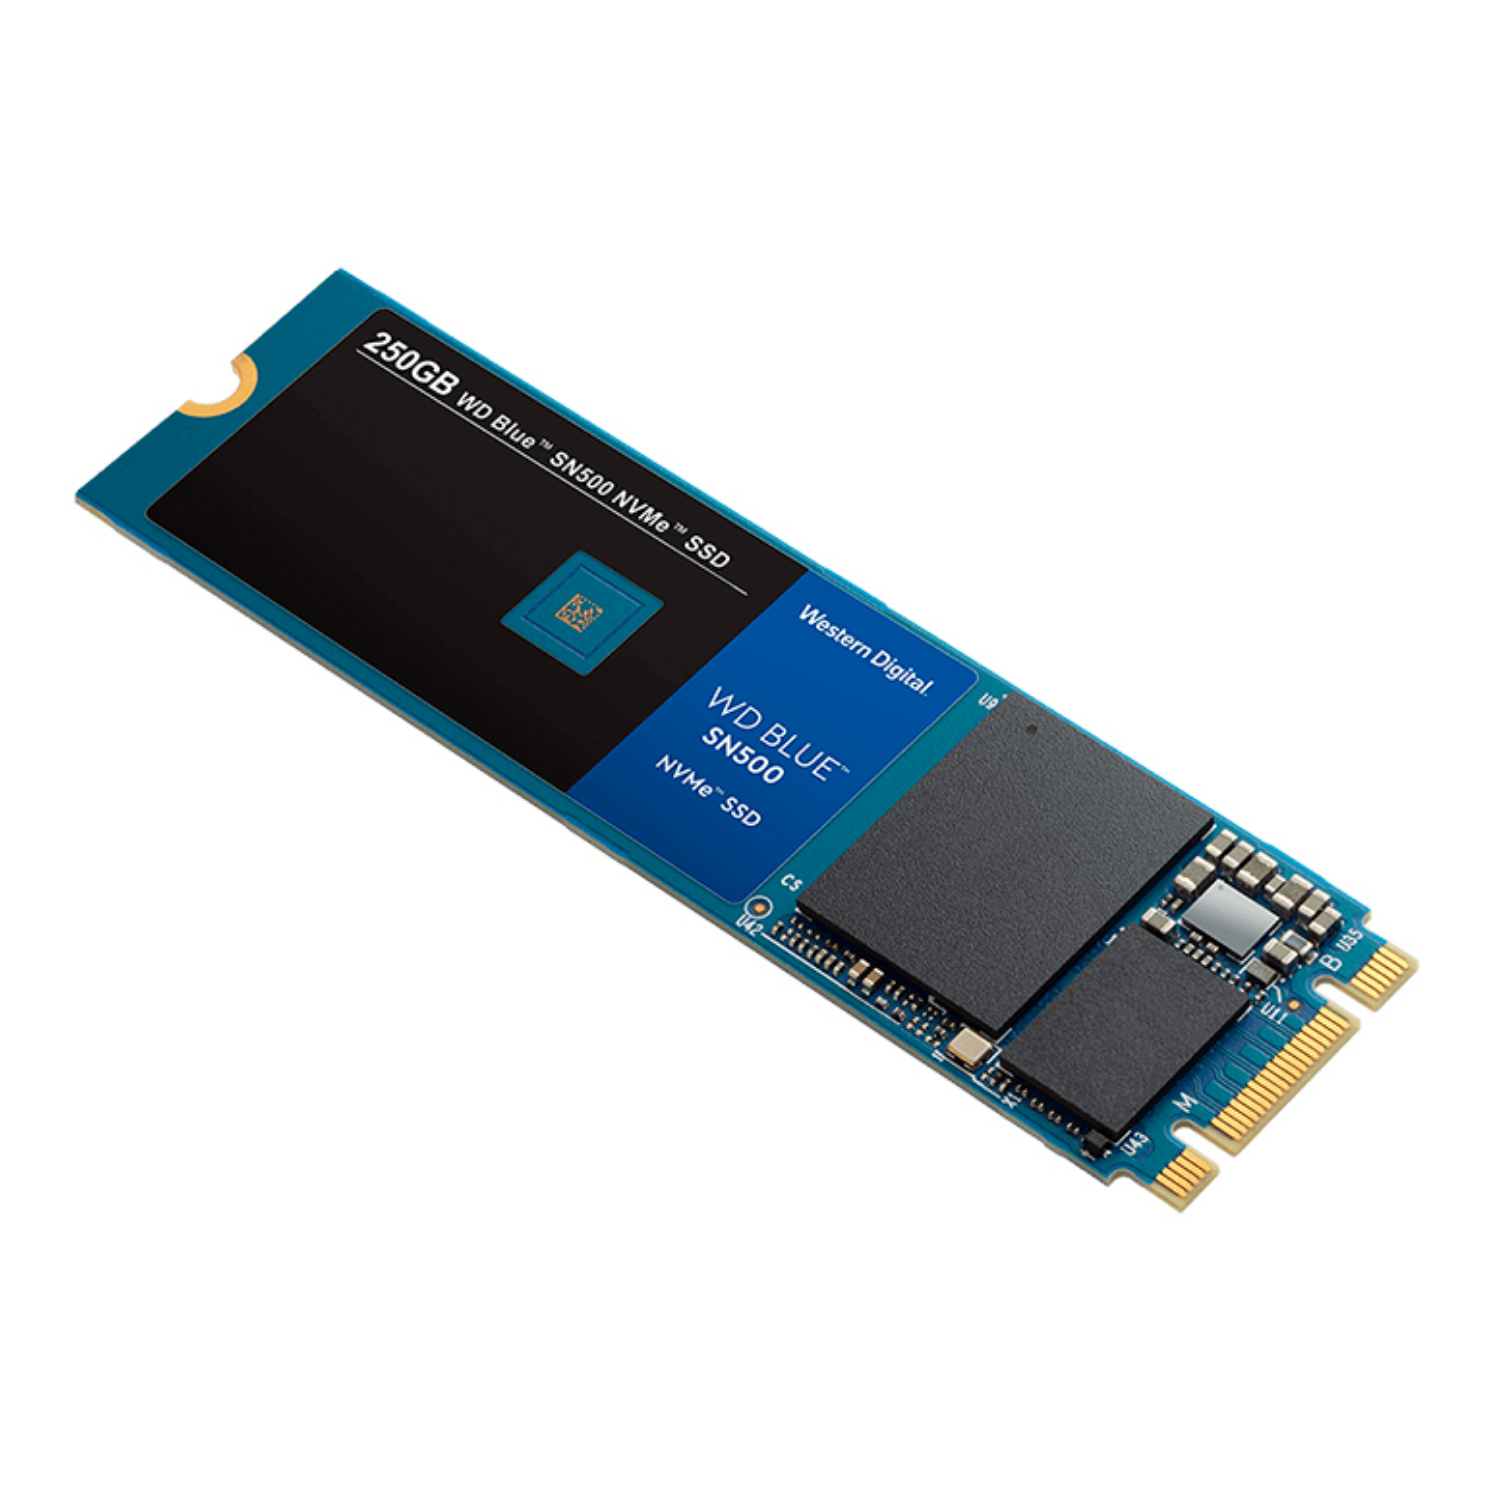 Disco Duro Solido Wester Digital Blue SN550 500GB M.2 PCIe (WDS500G2B0C)